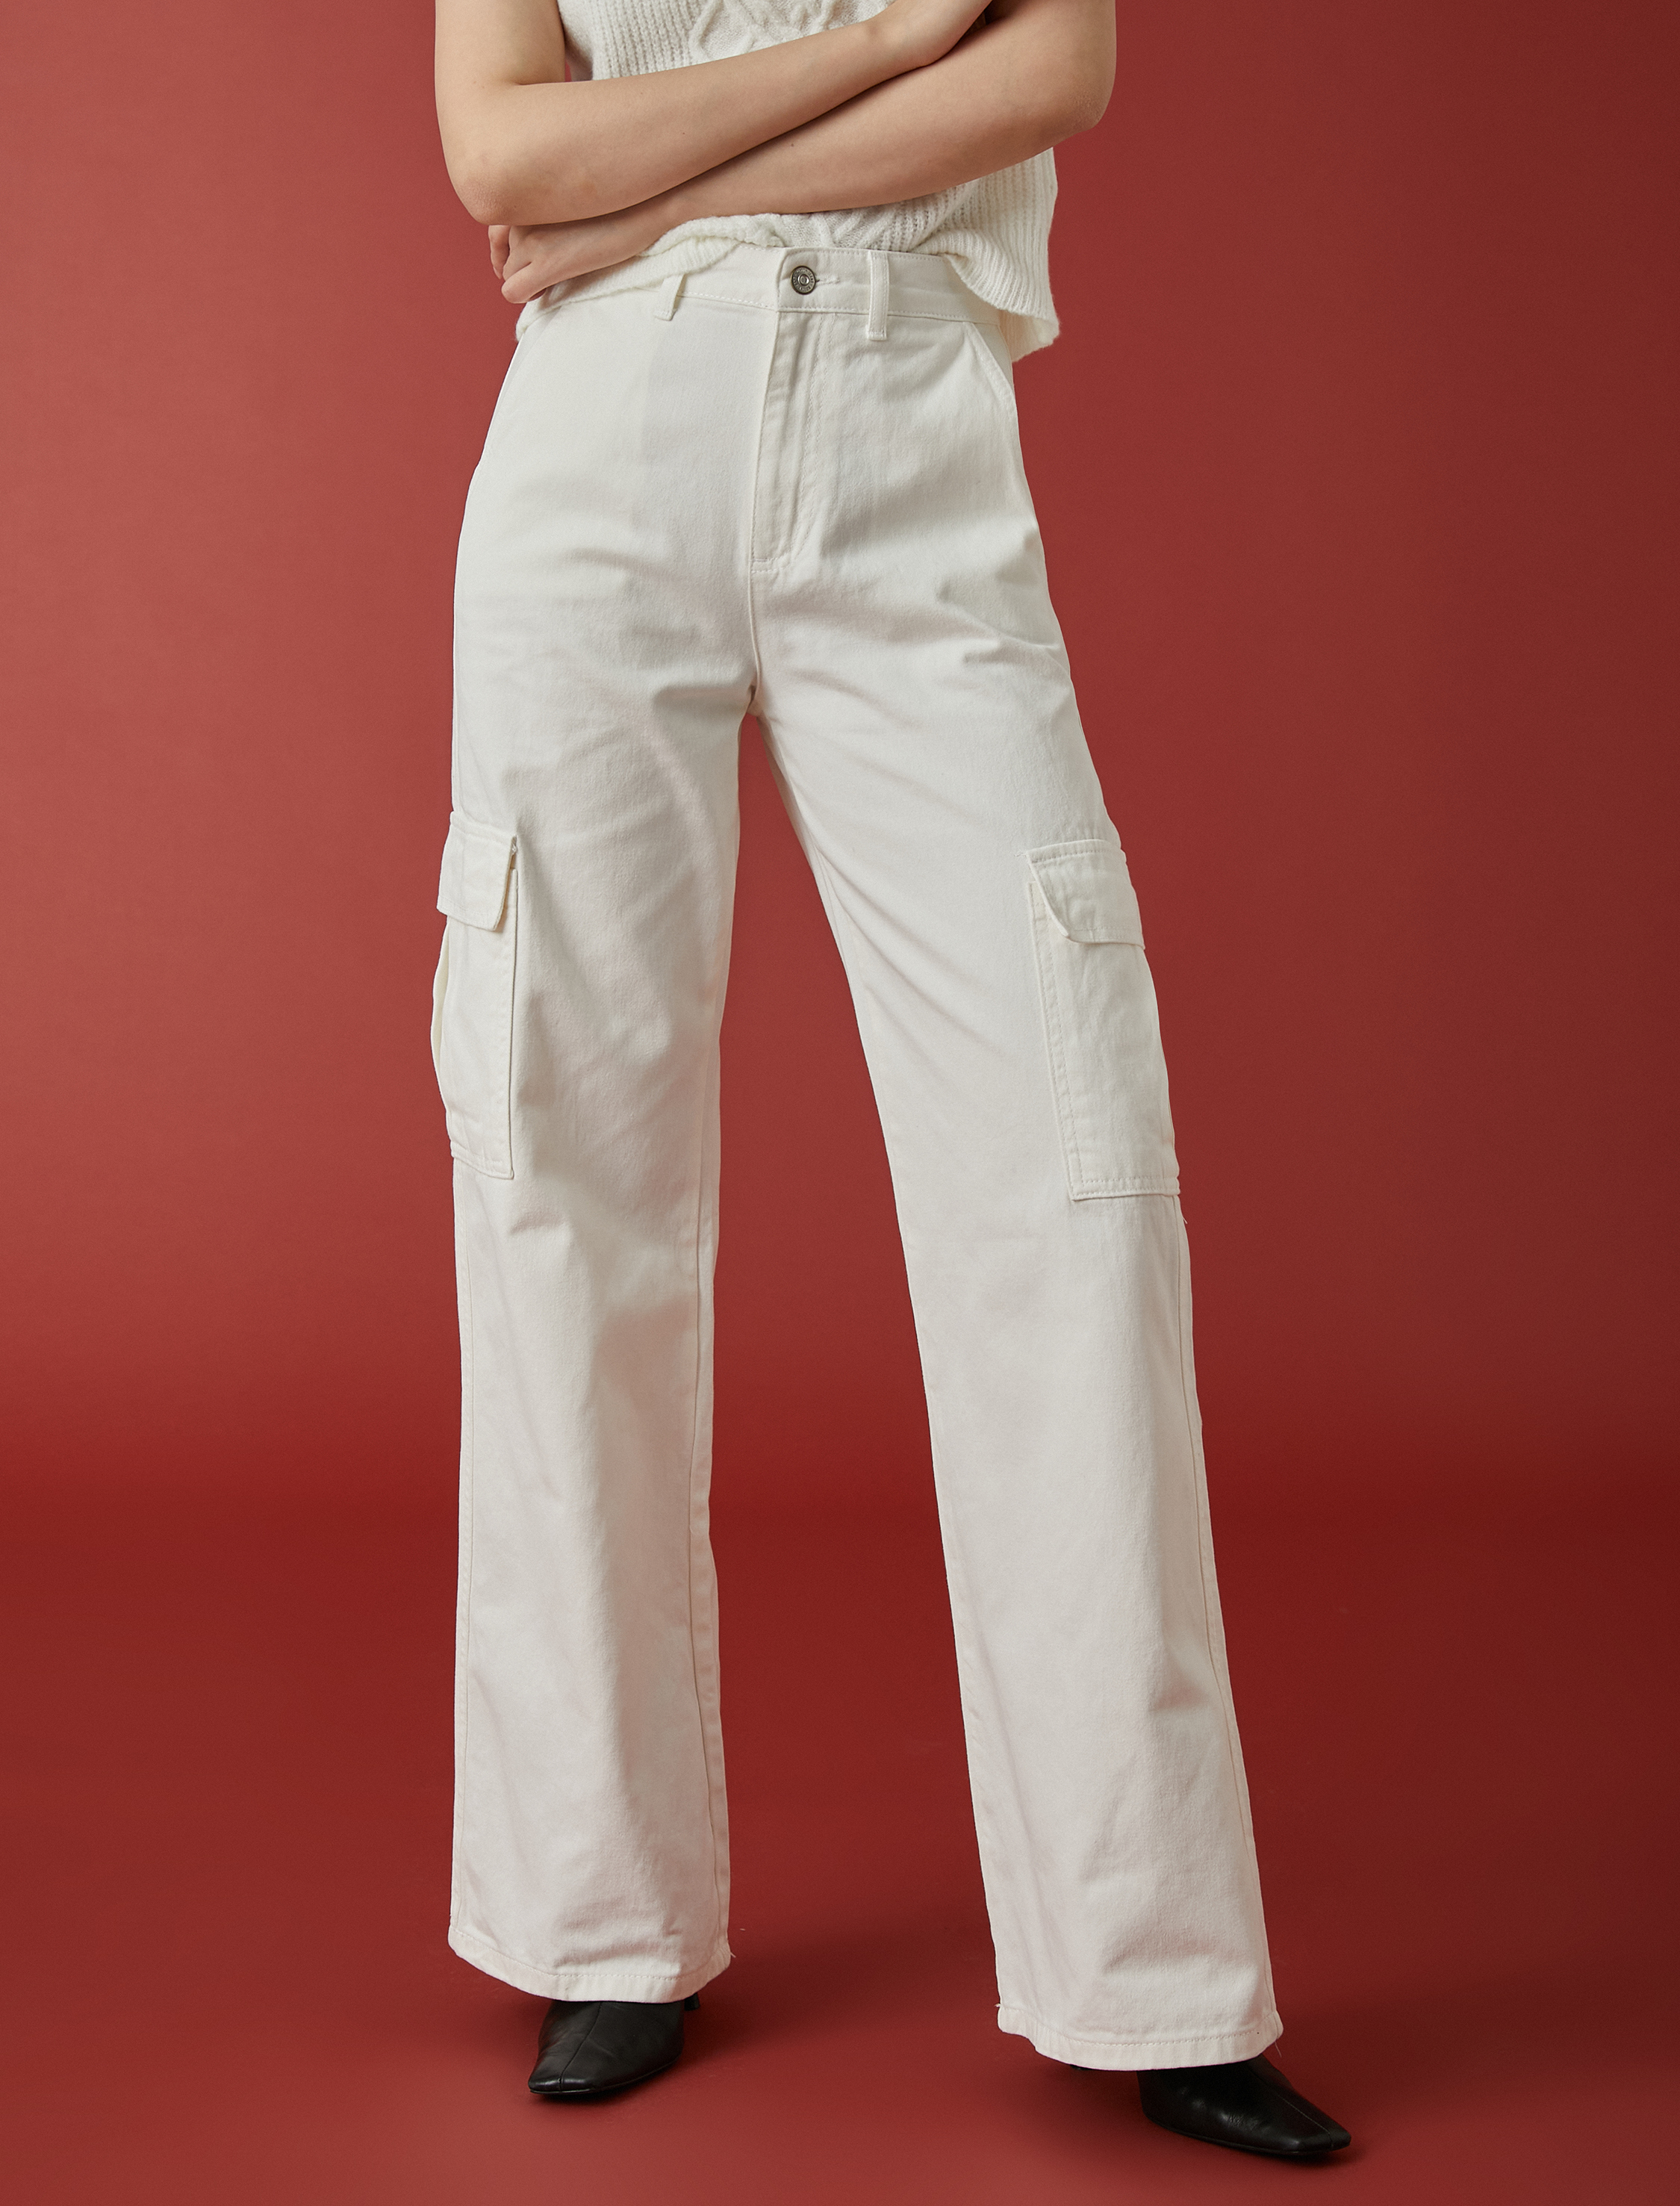 WOMEN FASHION Trousers Slacks Shorts Red/White S discount 62% NoName slacks 